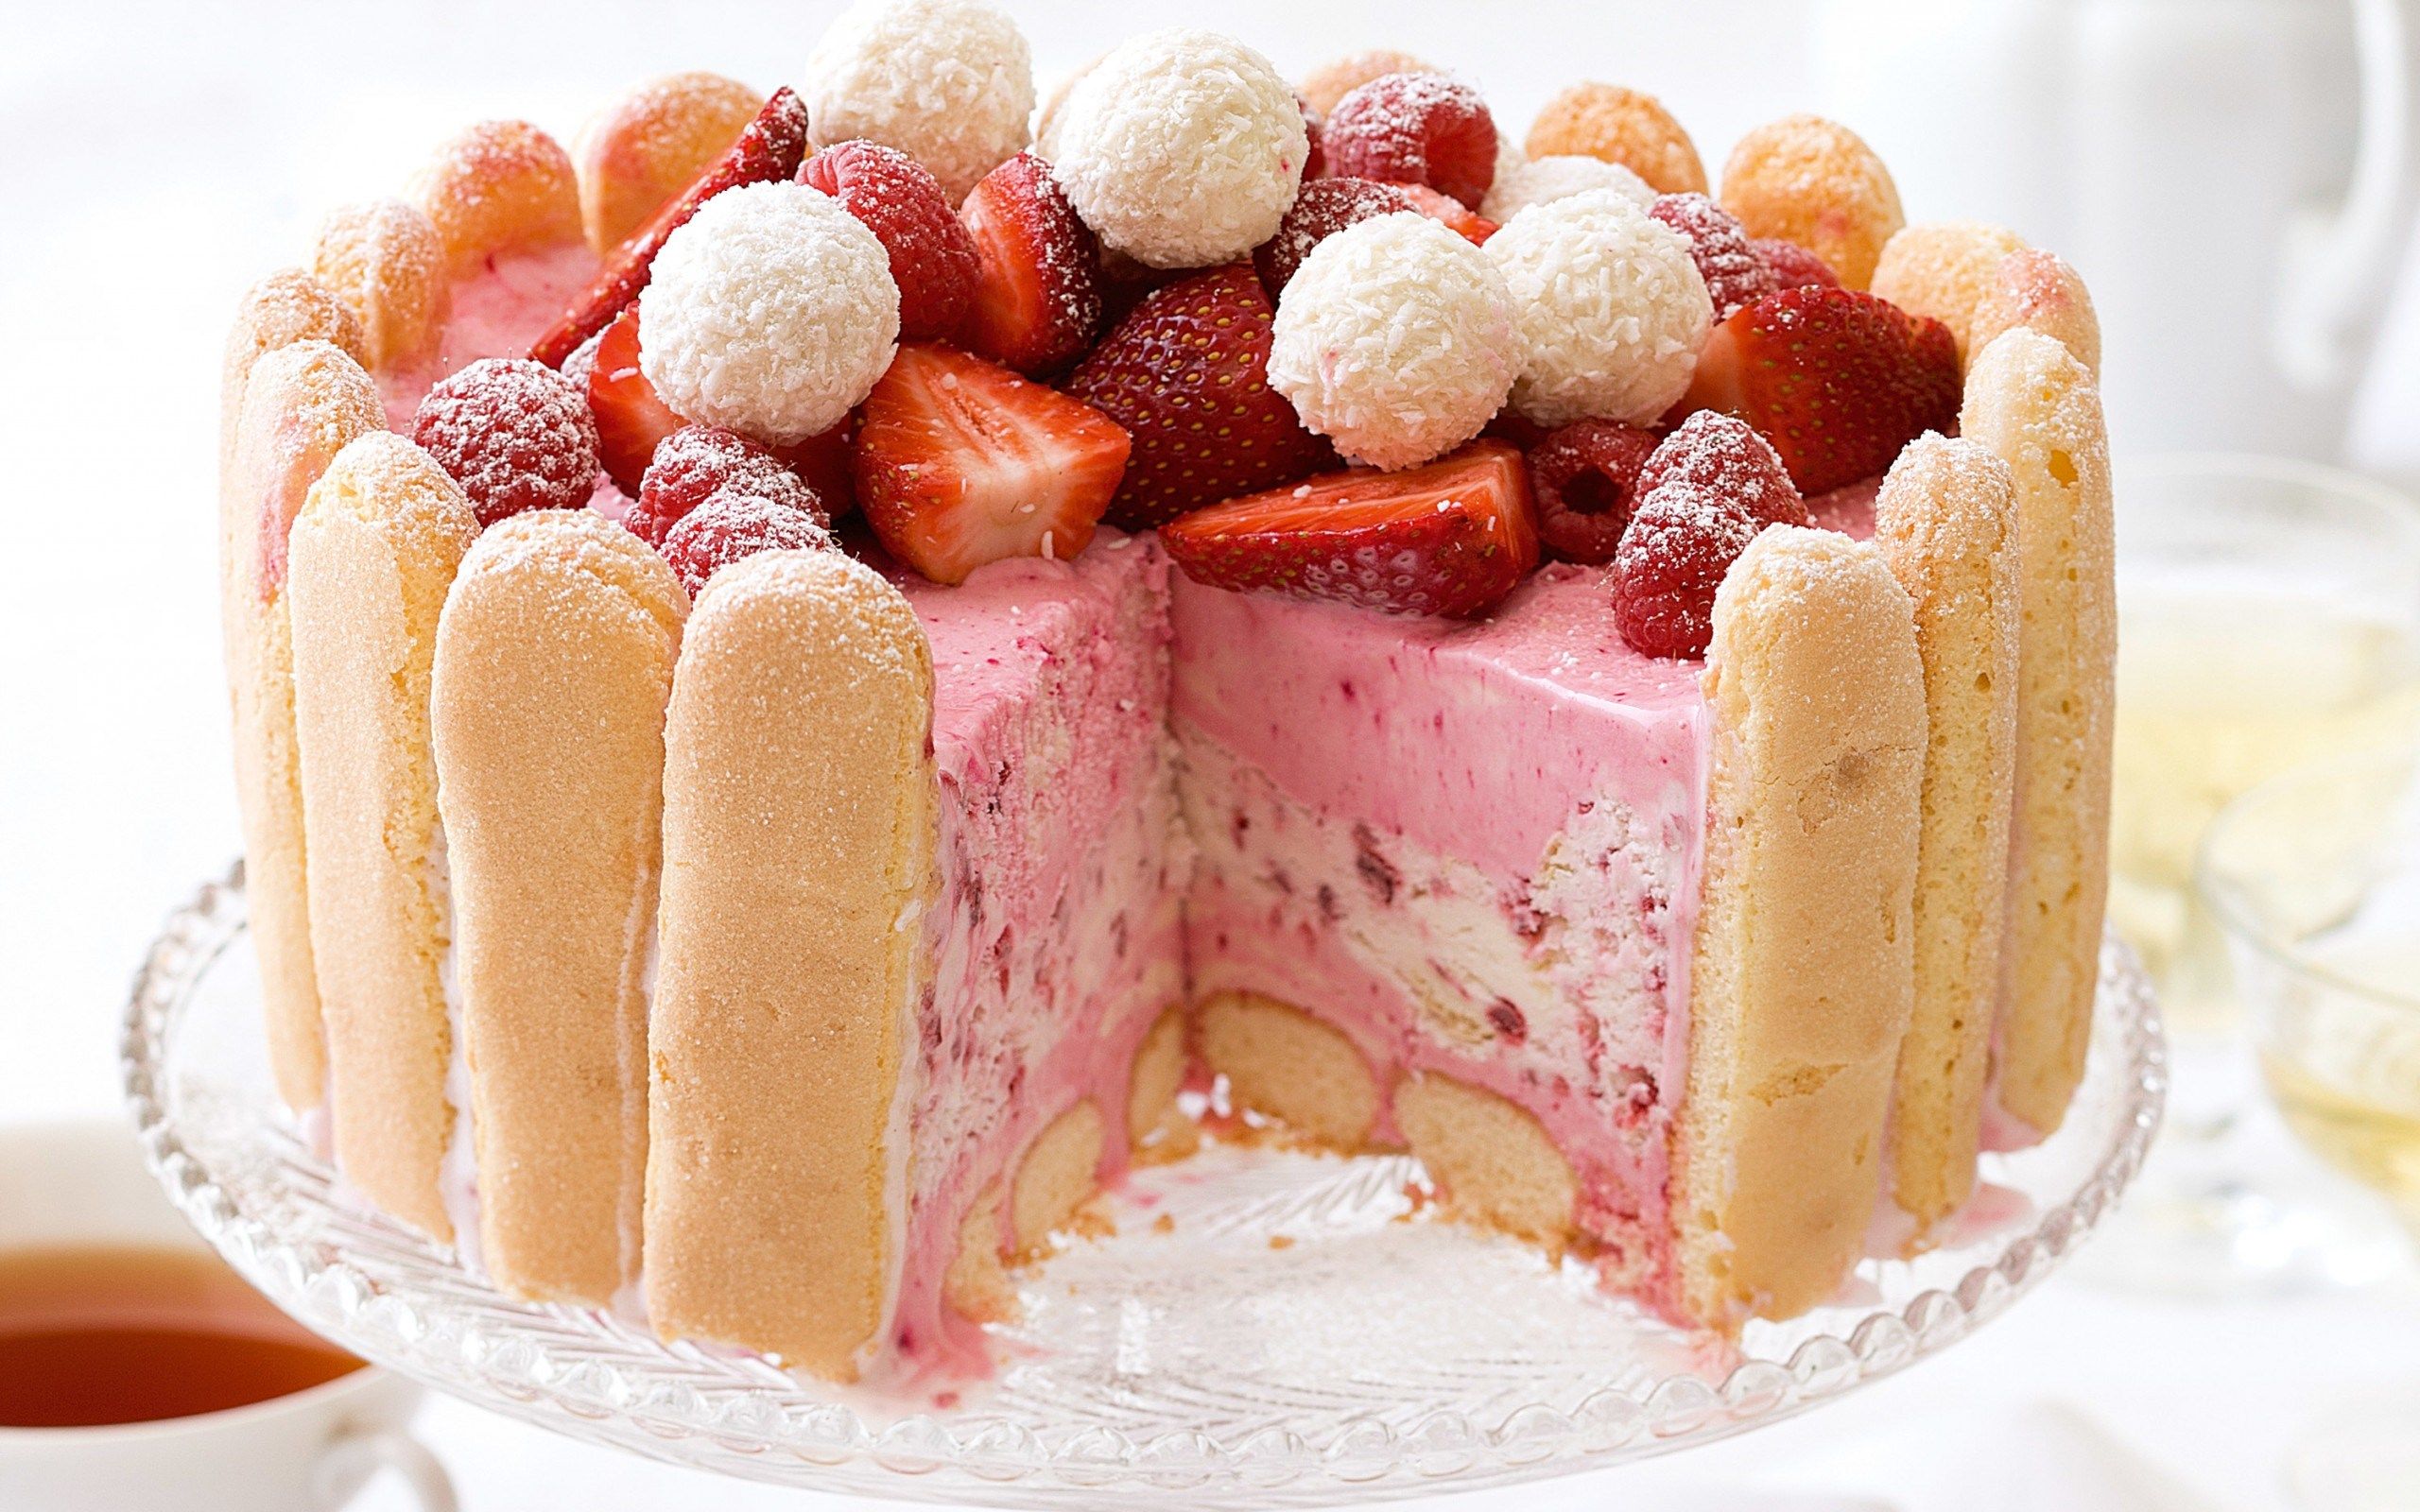 HD wallpaper, Berries, Strawberries, Dessert, Sweet, Cake